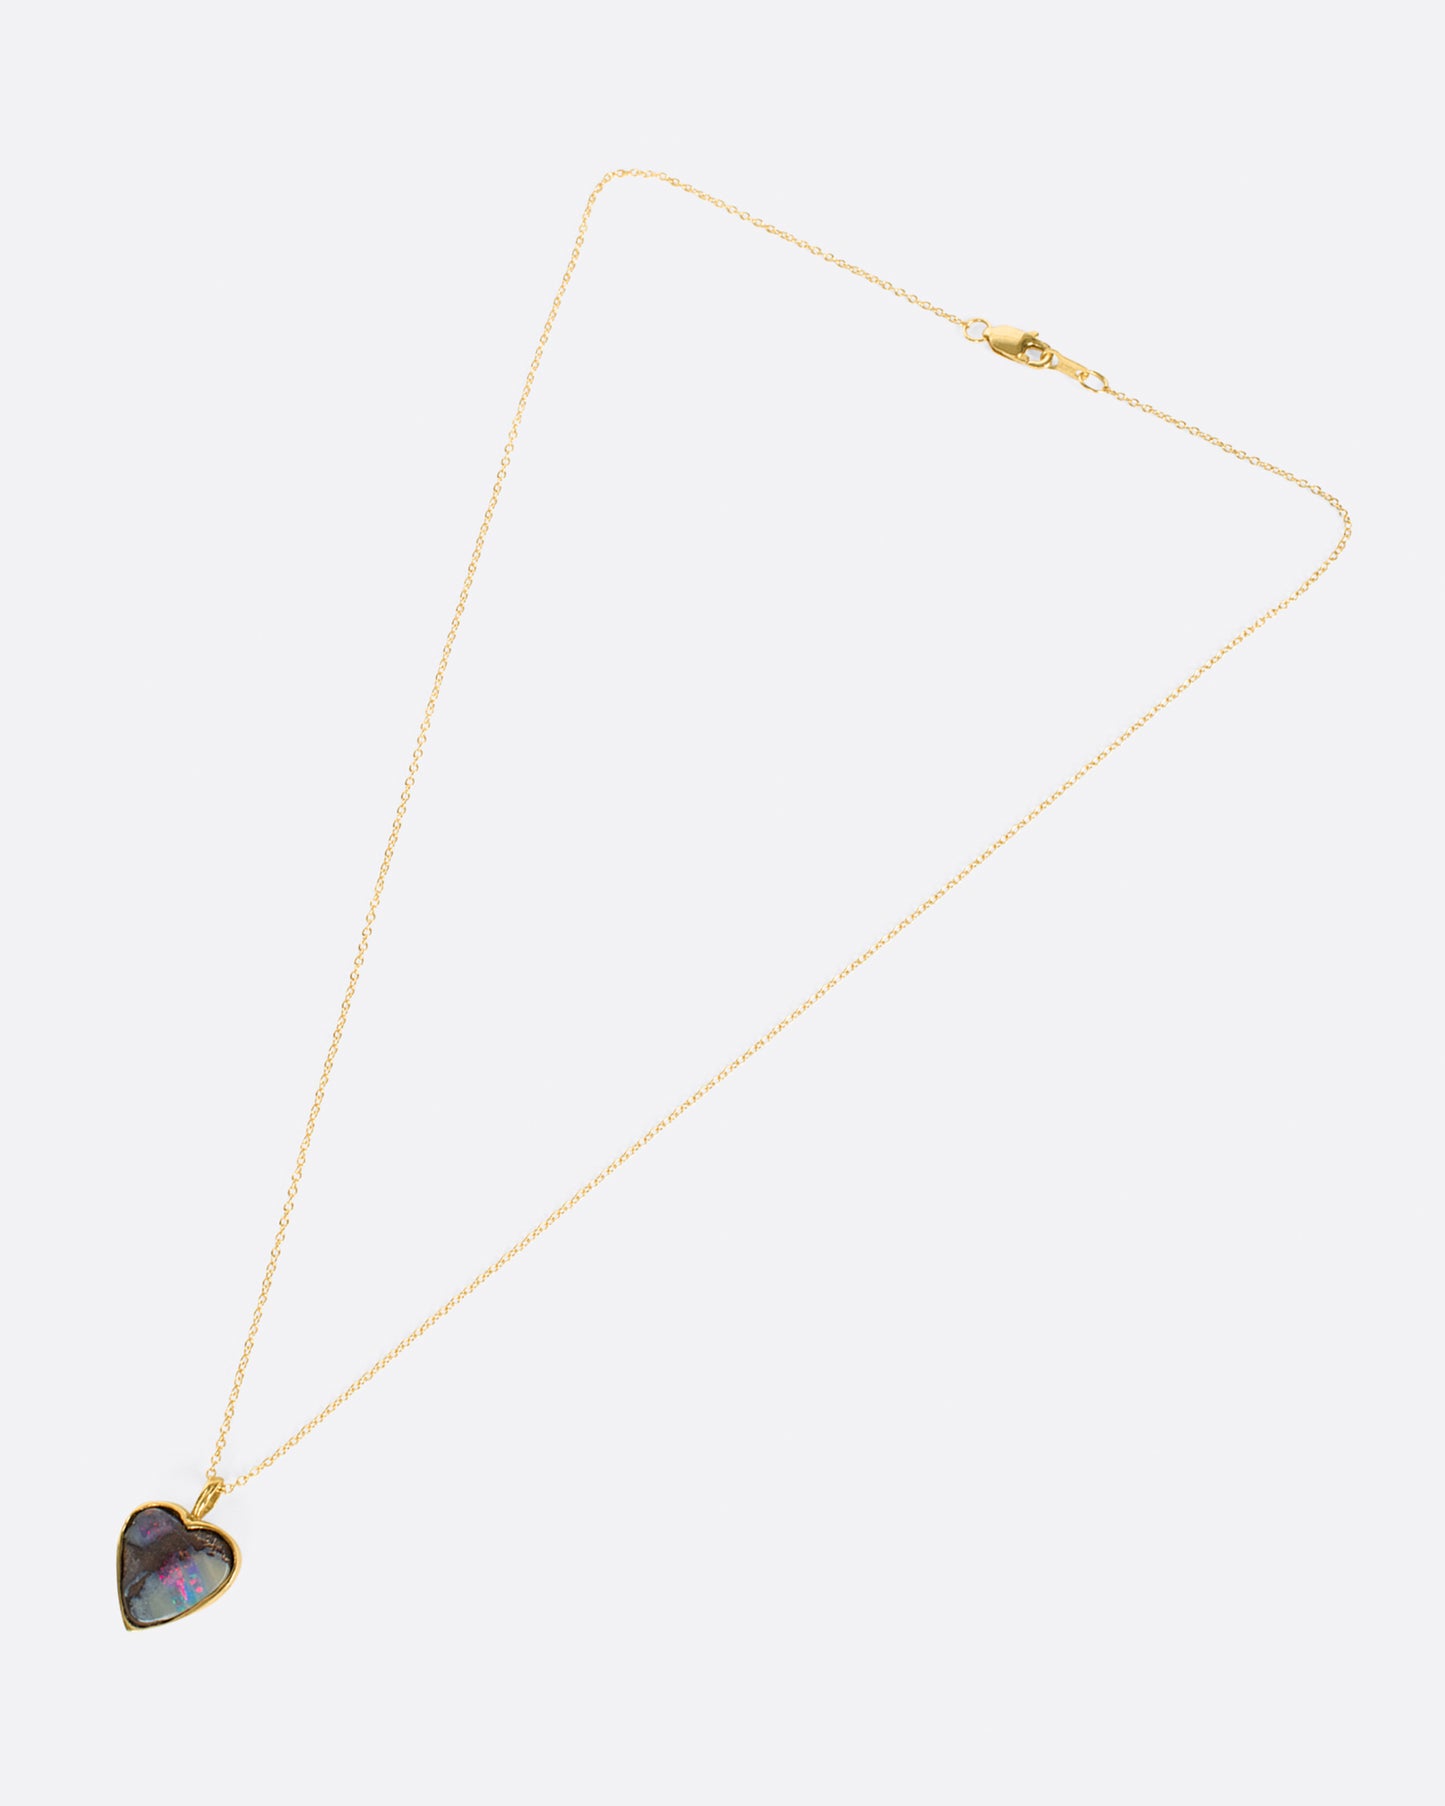 A heart shaped Australian opal pendant with loads of flash.